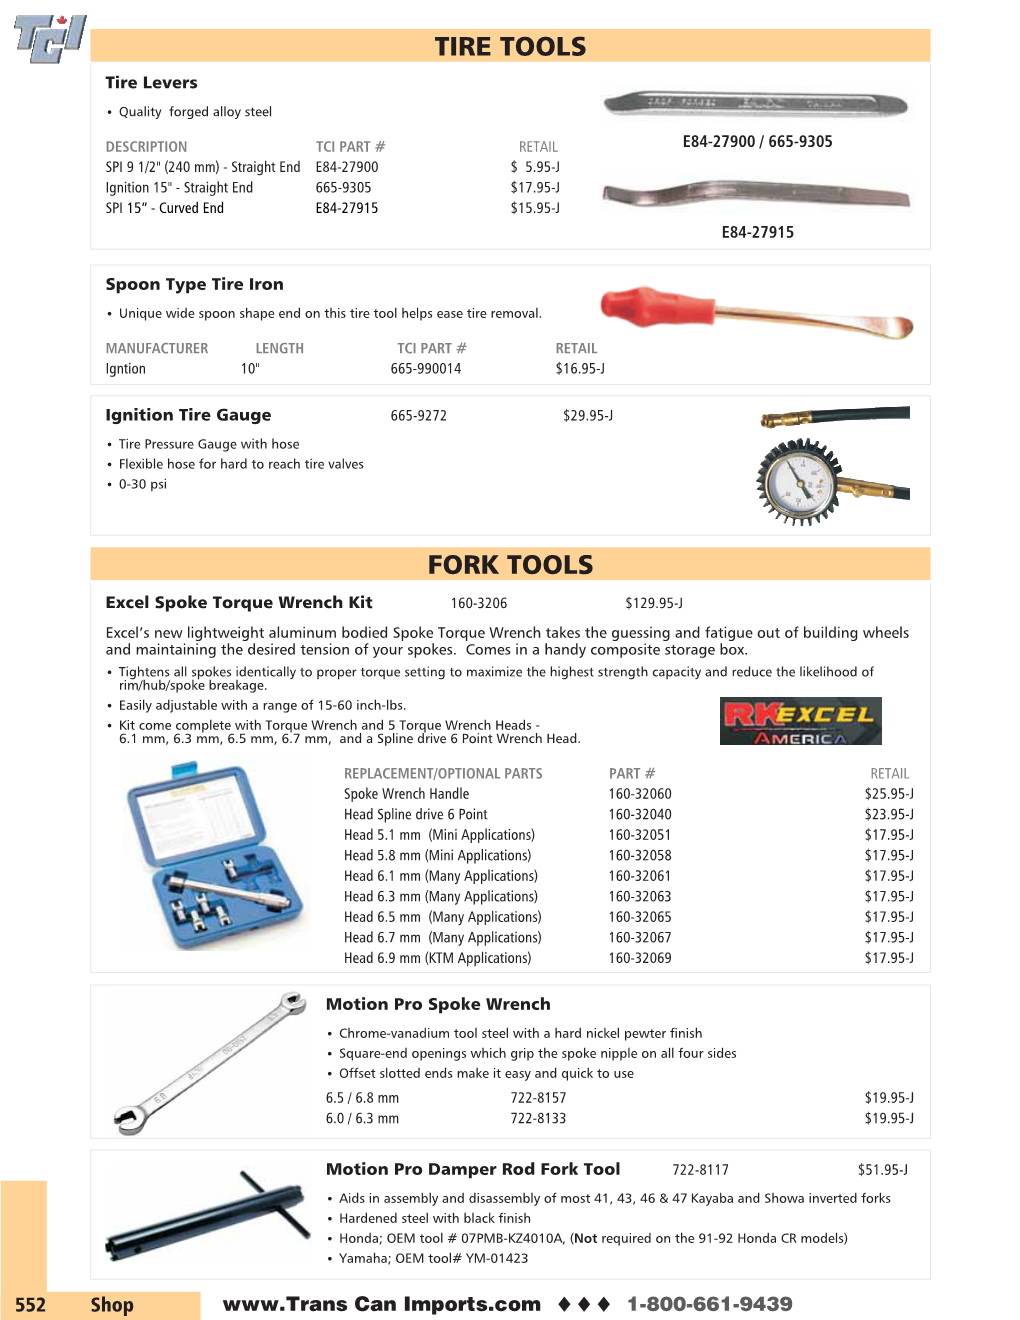 Fork Tools Tire Tools